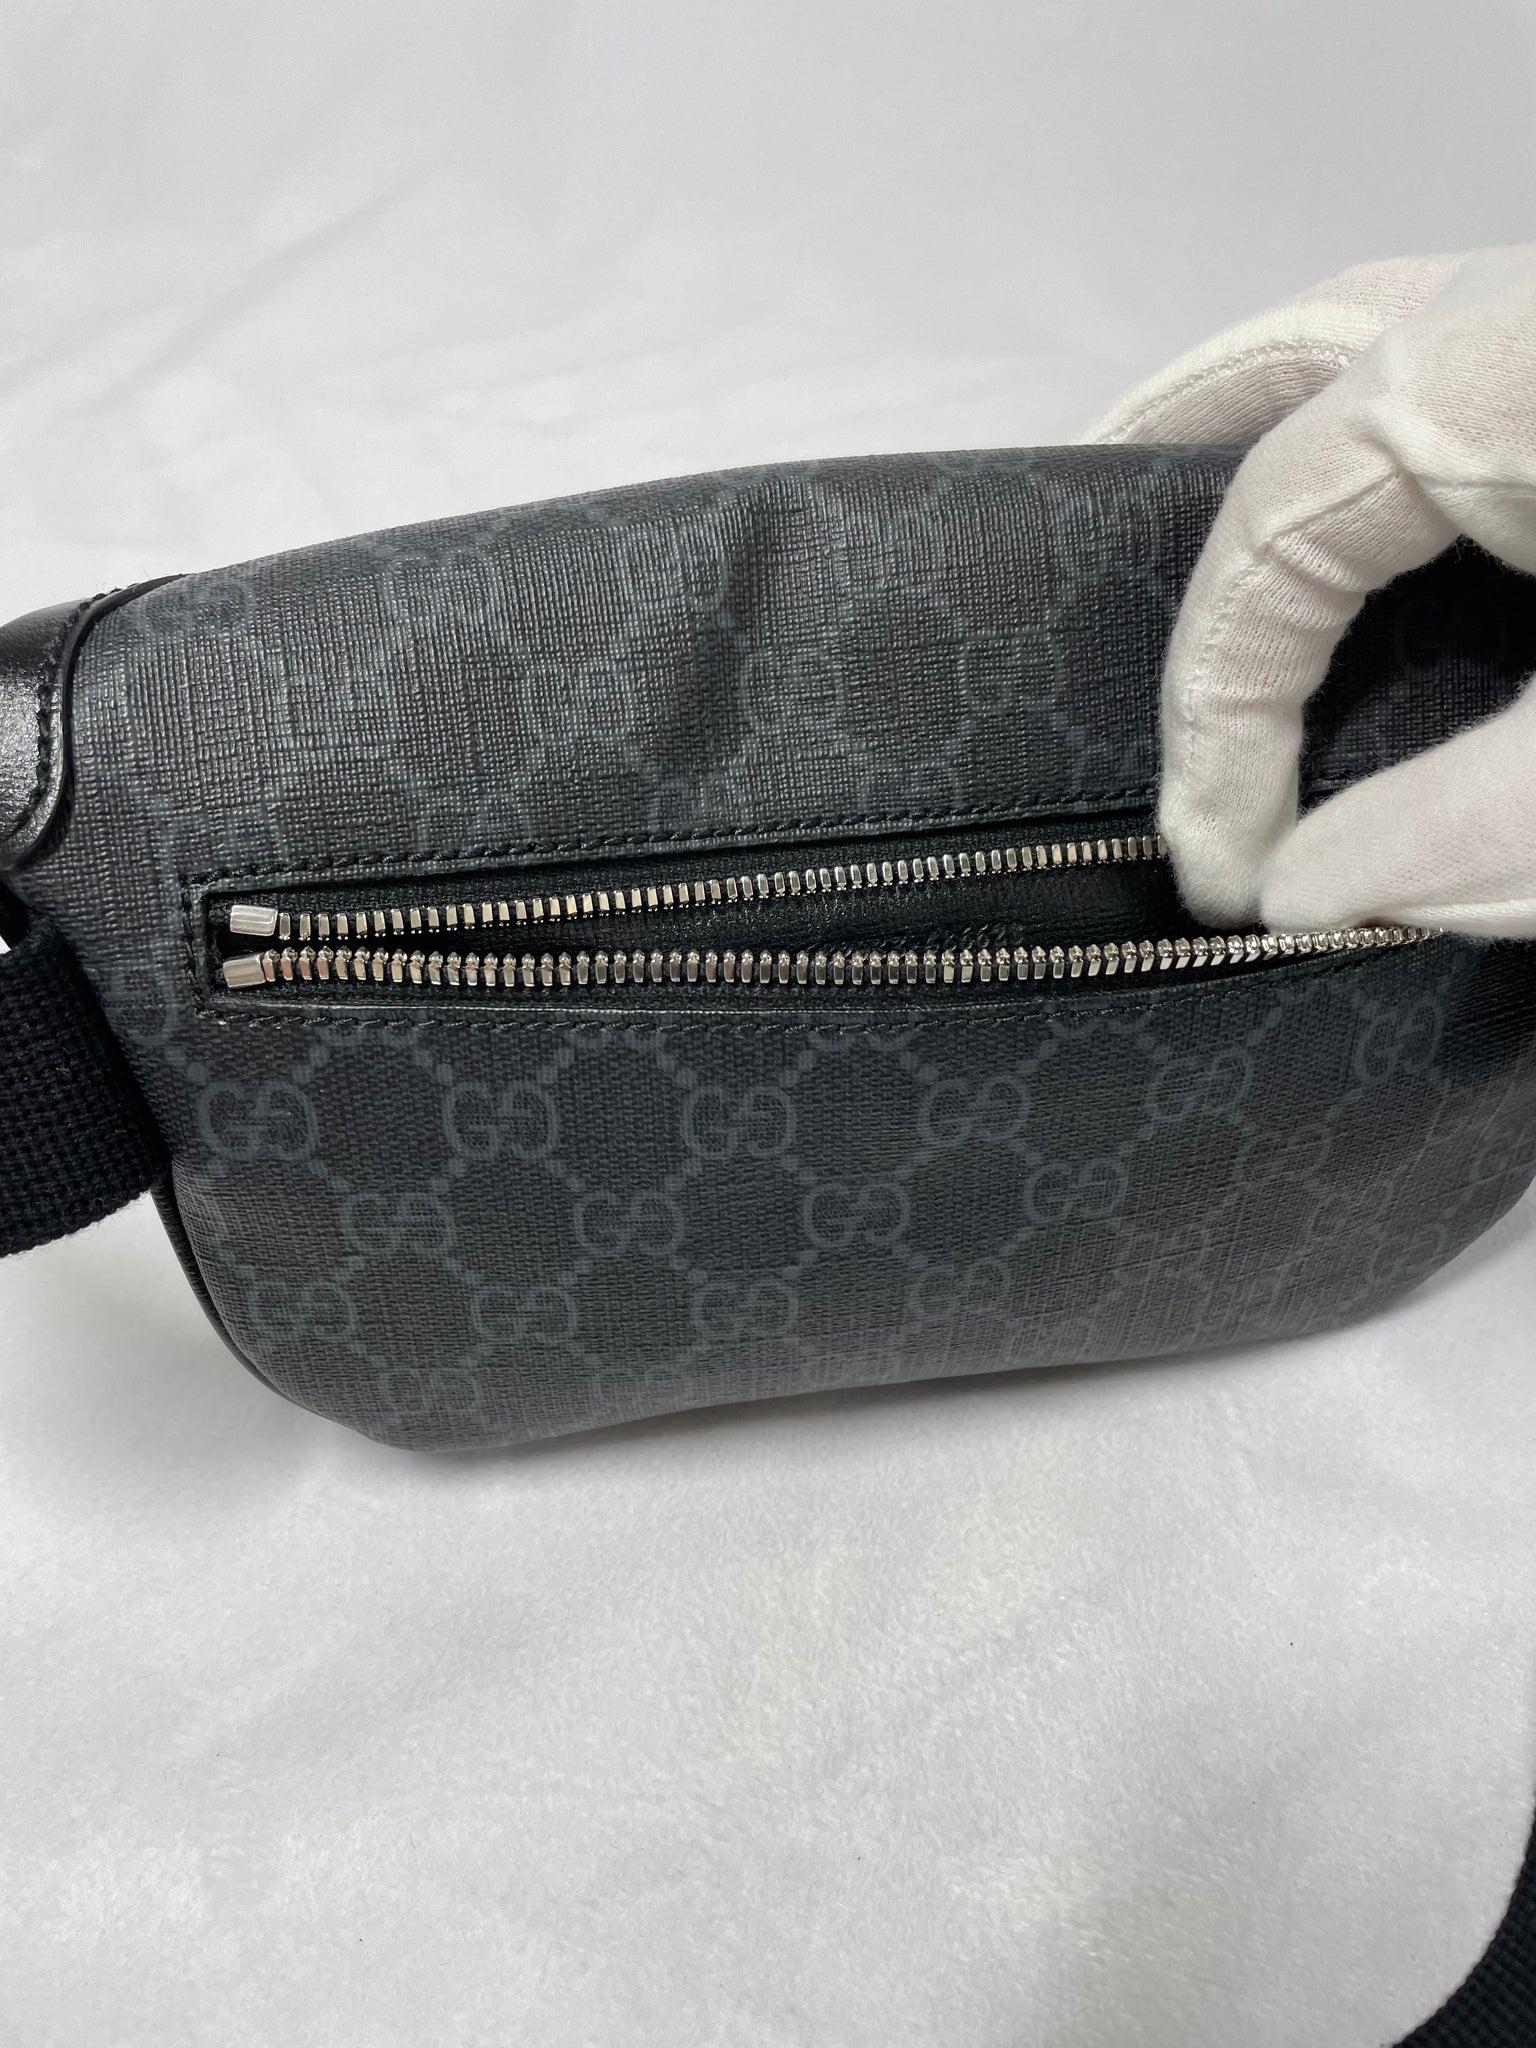 Gucci GG Supreme Belt Bag (unisex) *brand new*